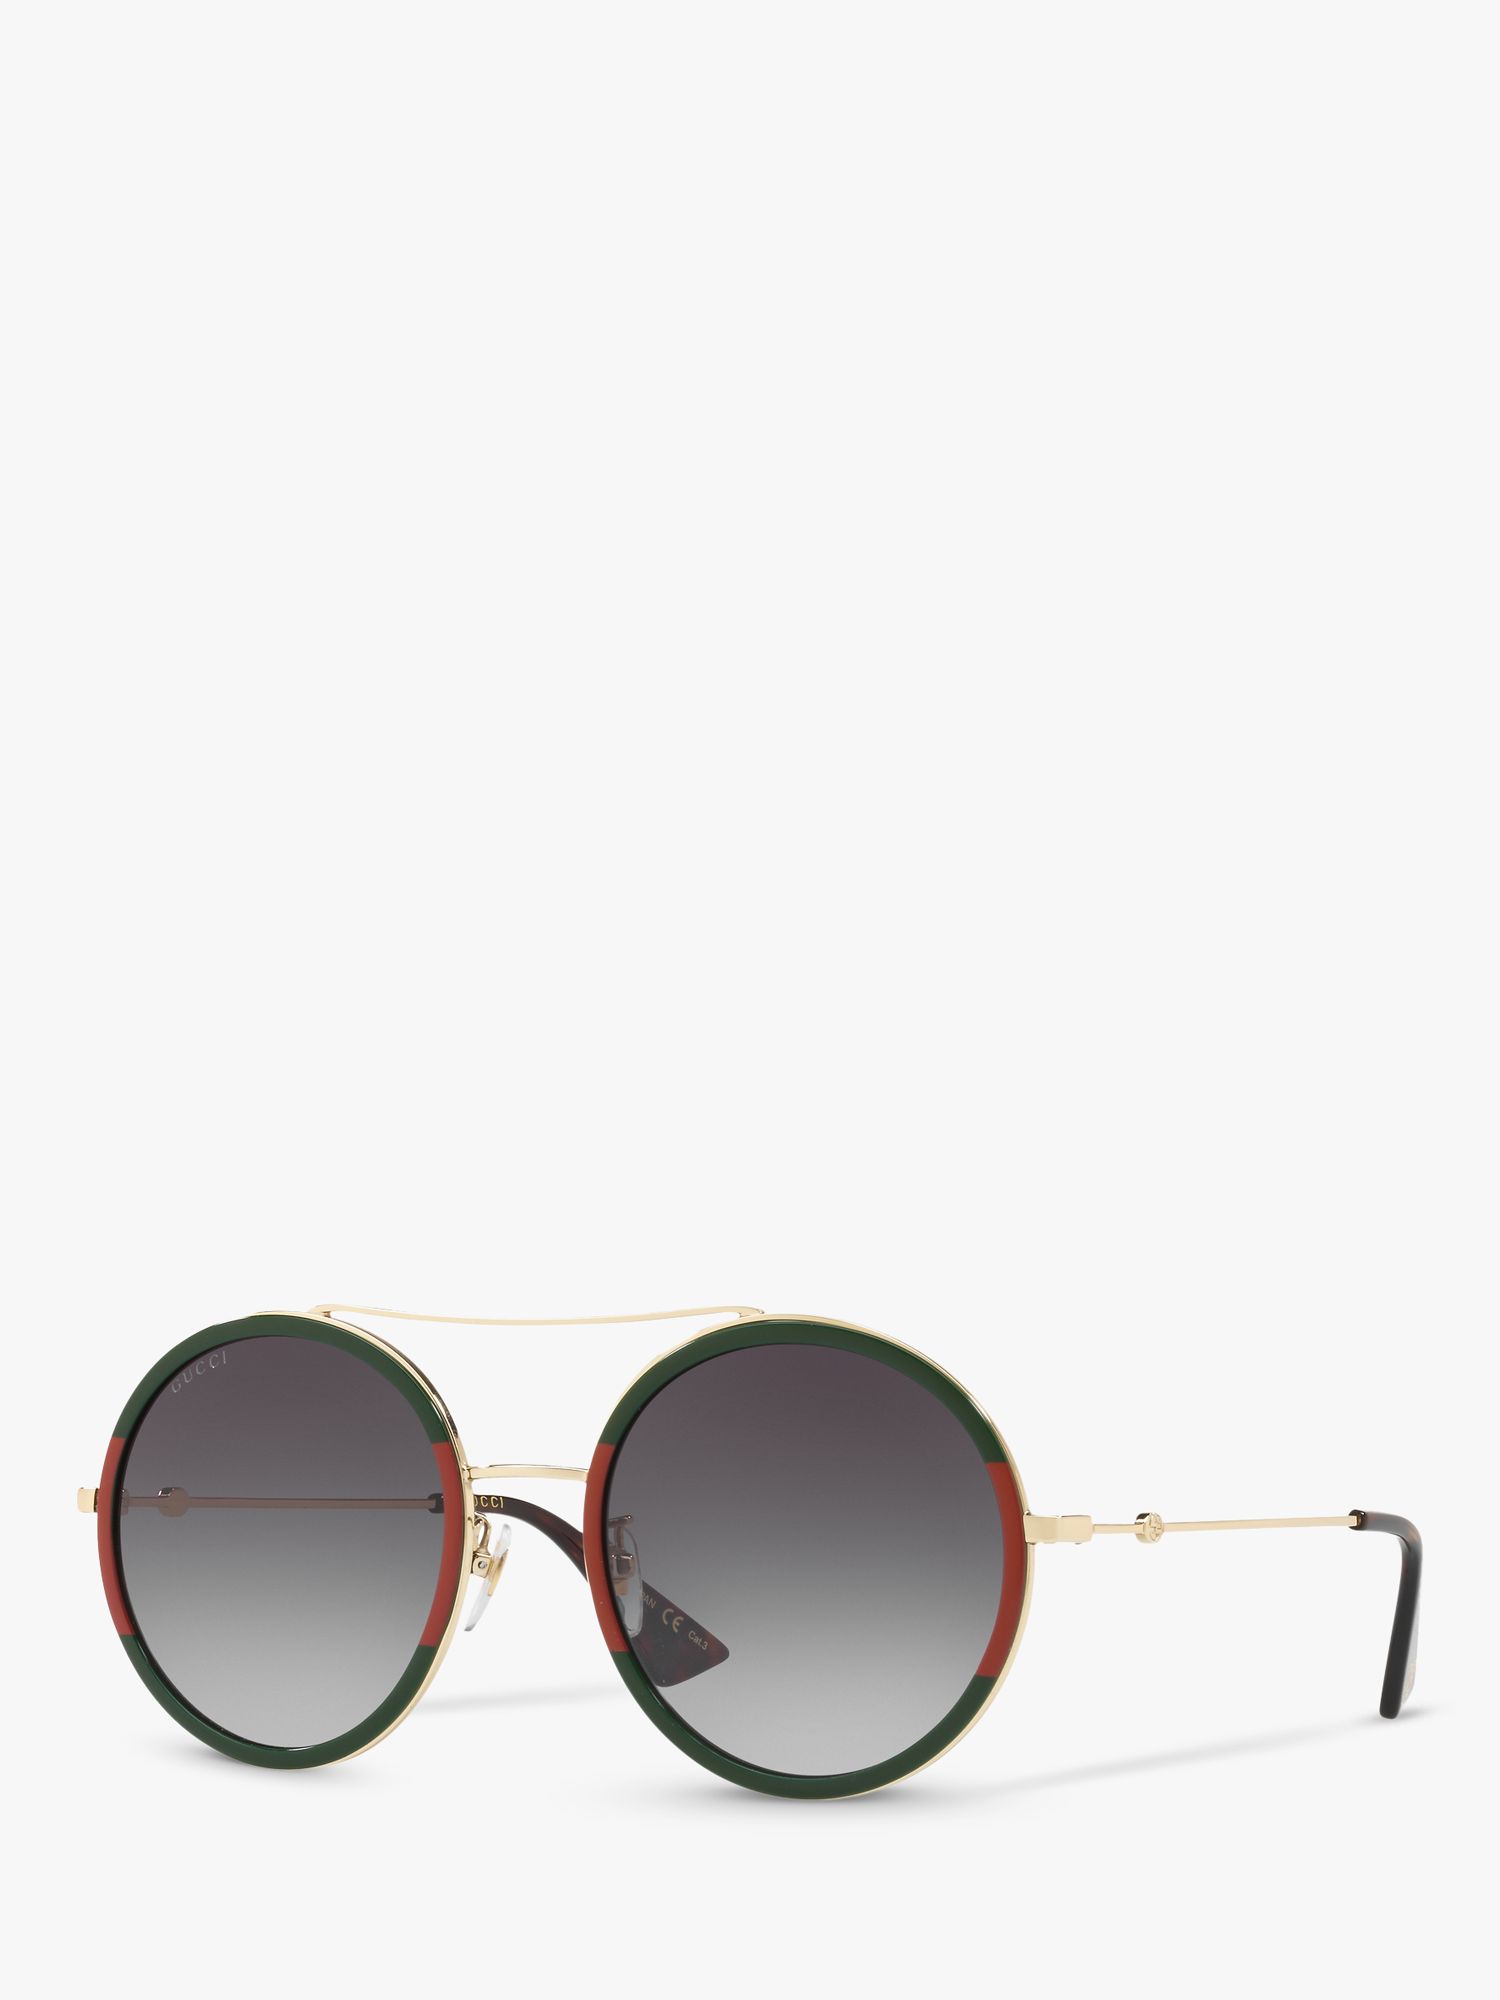 Gucci Sunglasses GG0061S-001 56mm Gold-Black / Grey Gradient - nyIwear